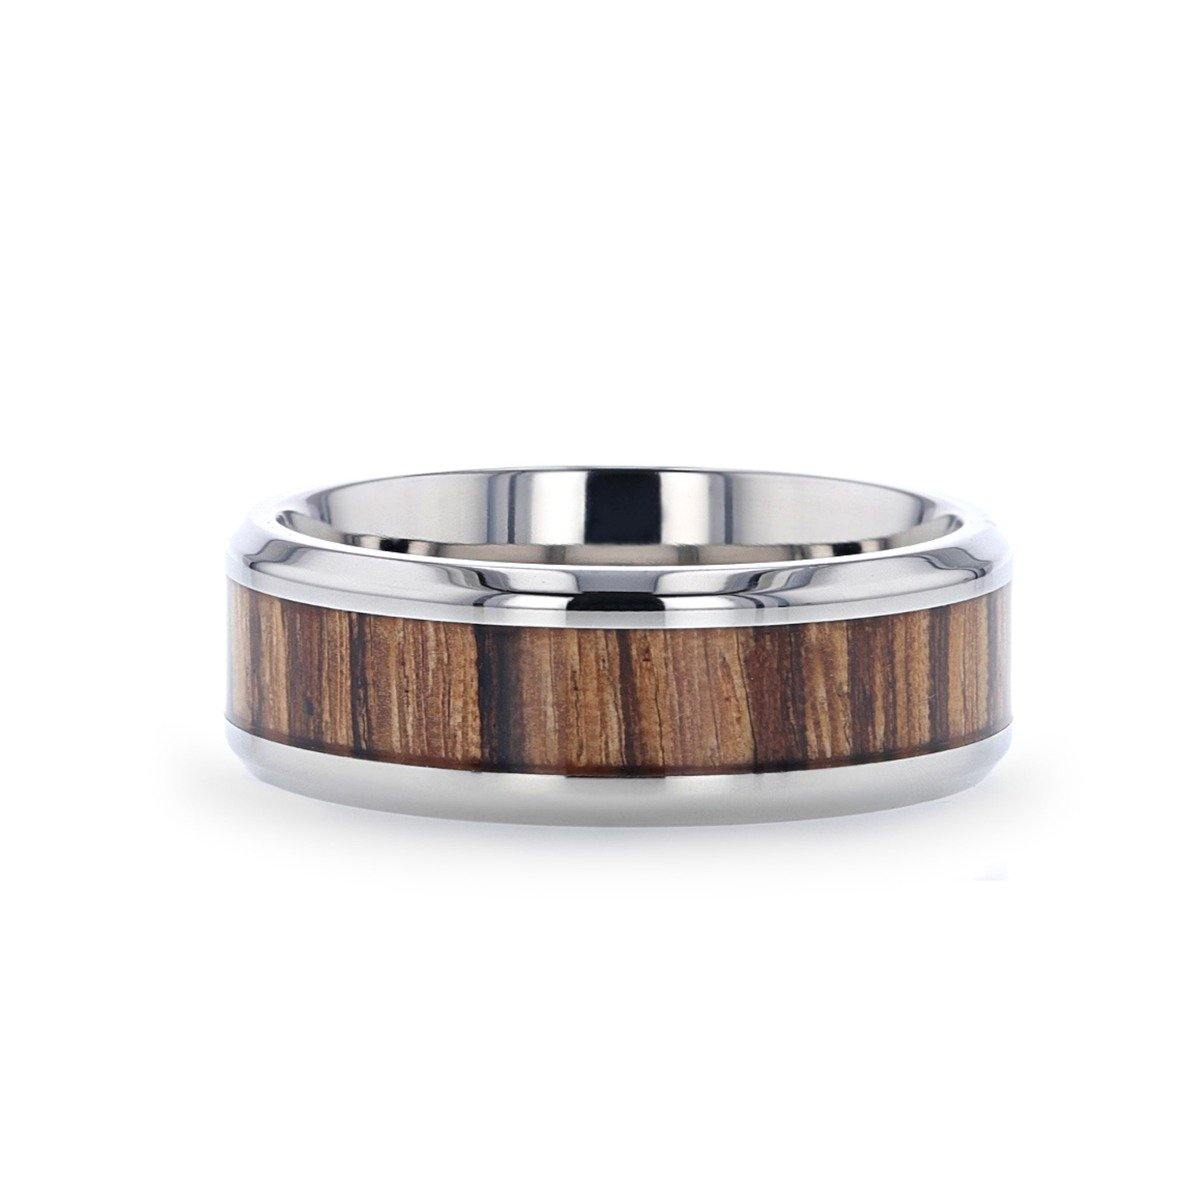 ZINGANA - Titanium Ring with Beveled Edges and Real Zebra Wood Inlay - 8mm - The Rutile Ltd